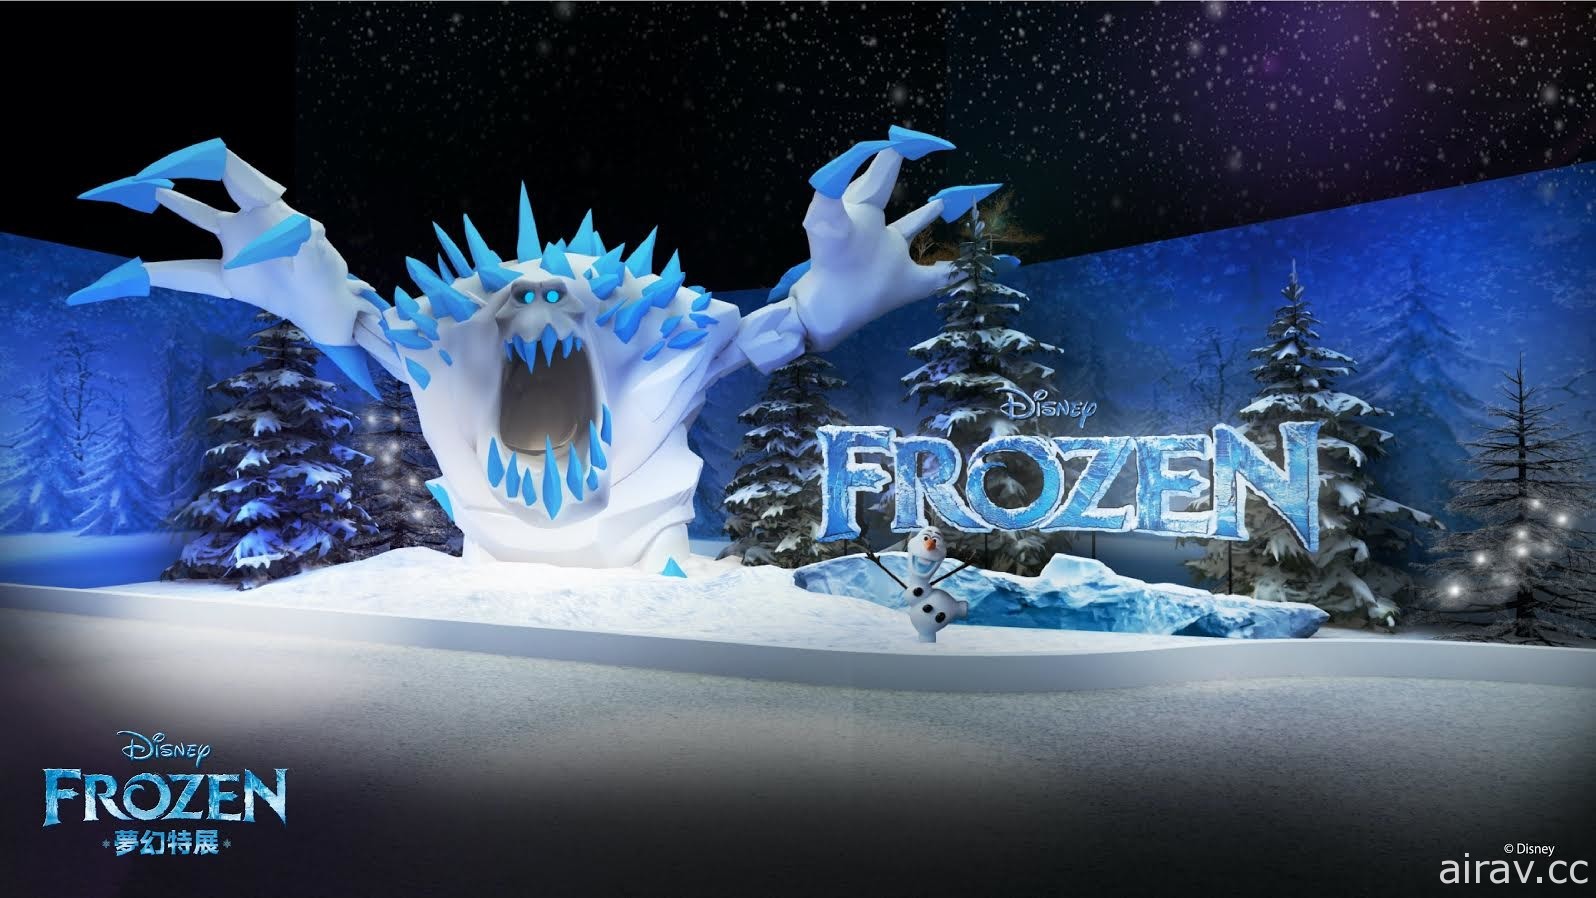 「FROZEN 冰雪奇緣夢幻特展」12 月在台揭幕 還原經典場景 科技互動體驗冰雪幻境